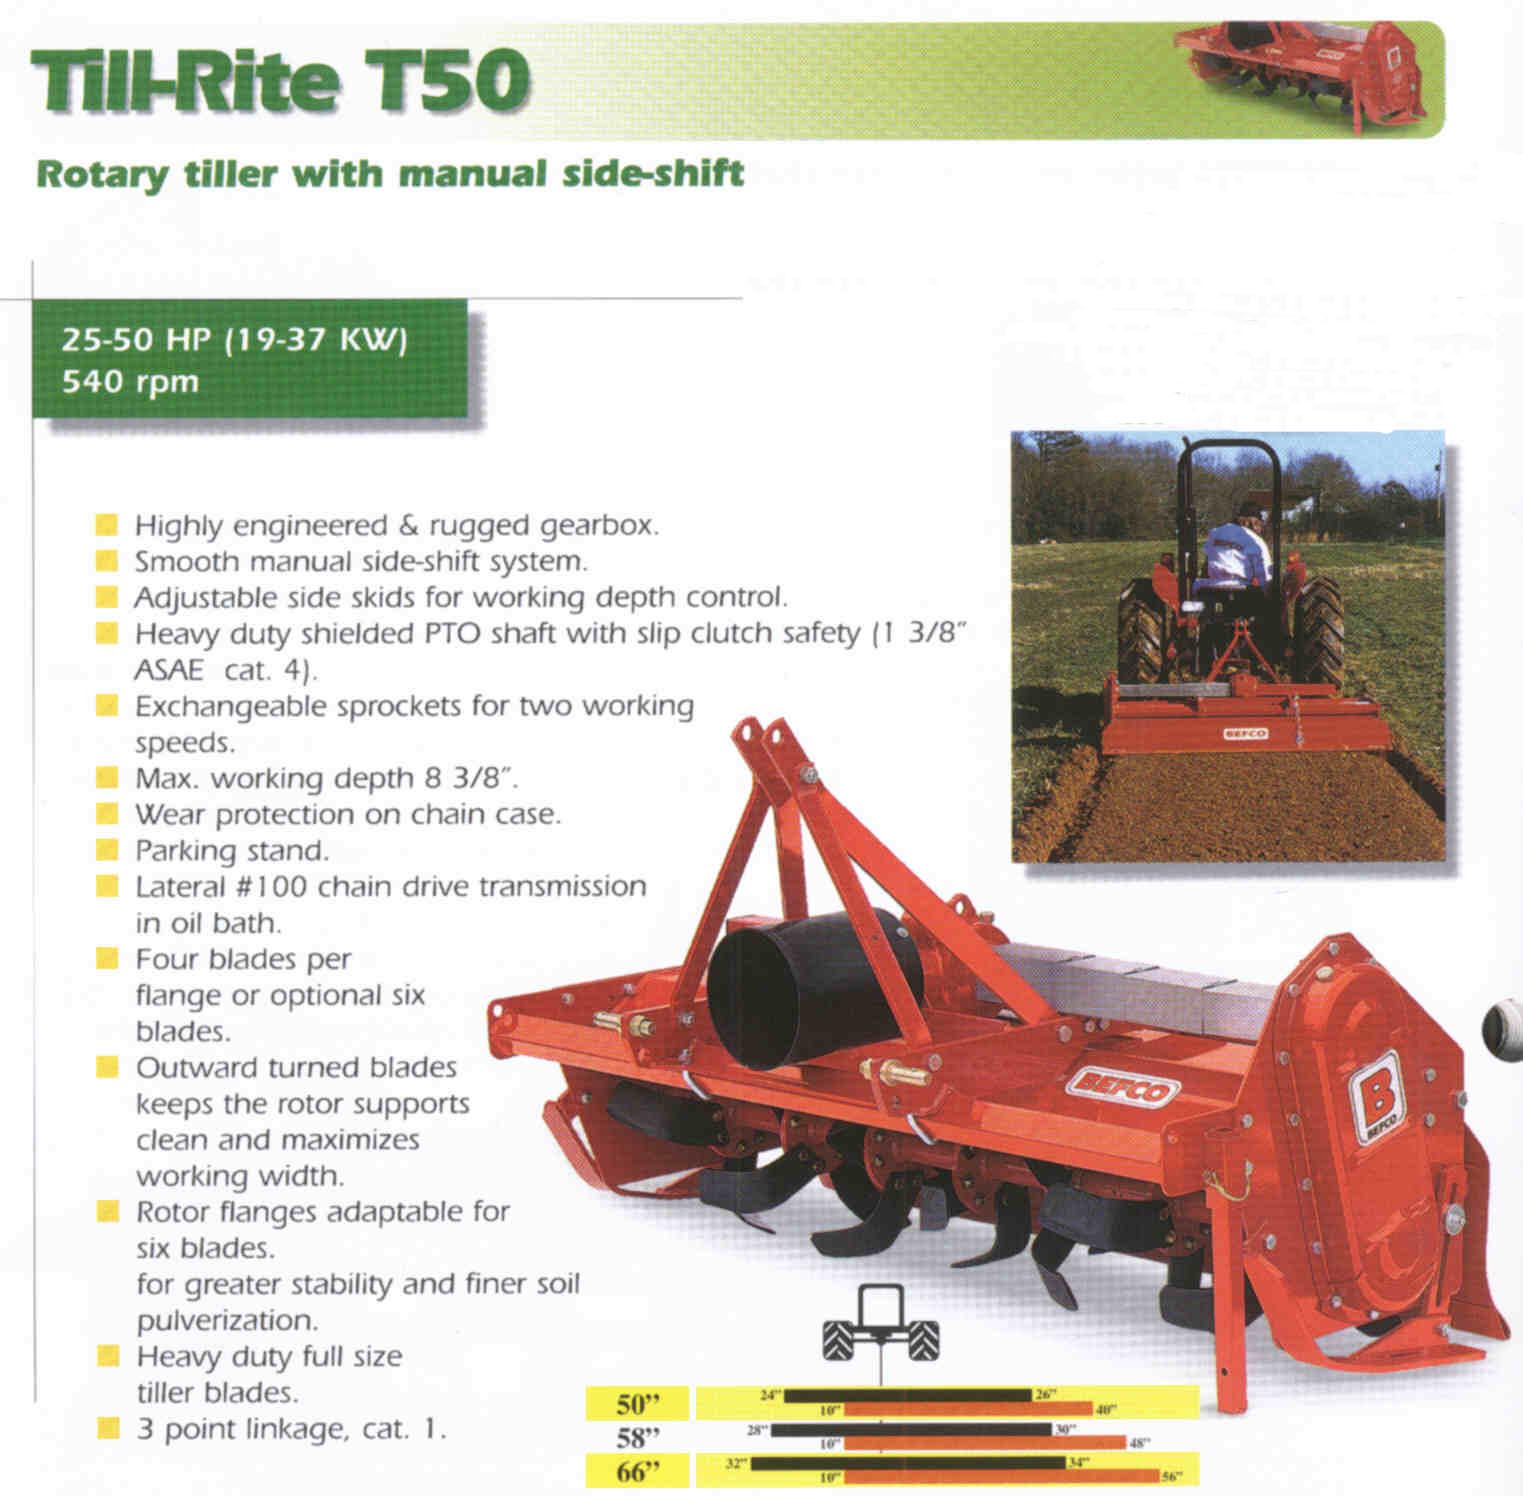 Till-Rite T50 Series Rotary Tillers